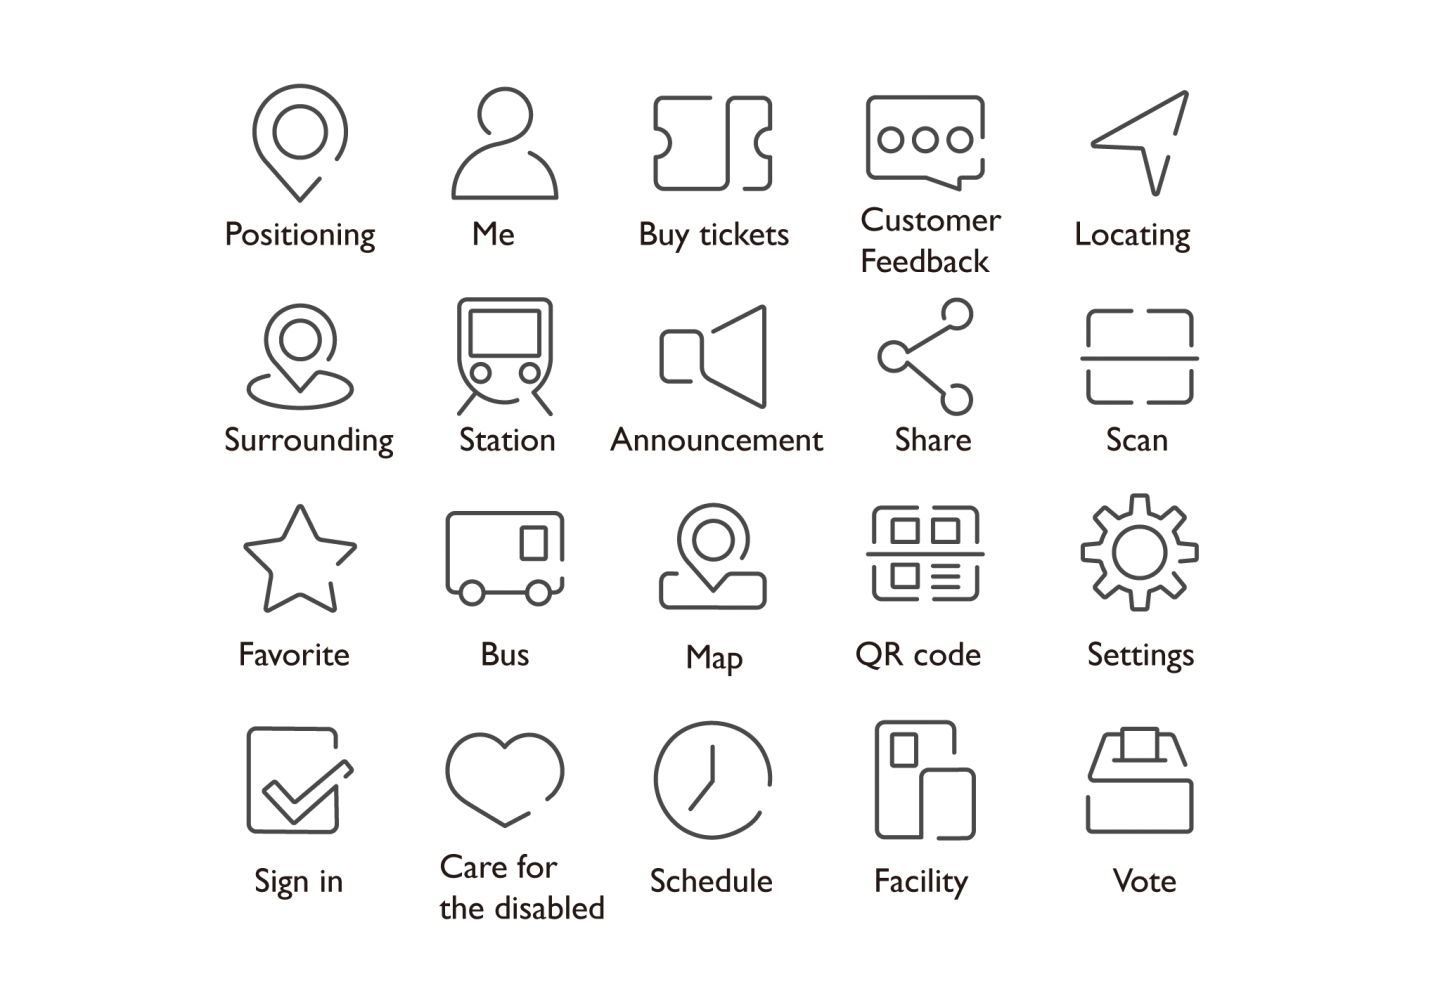 Shenzhen Metro App Icon System Design